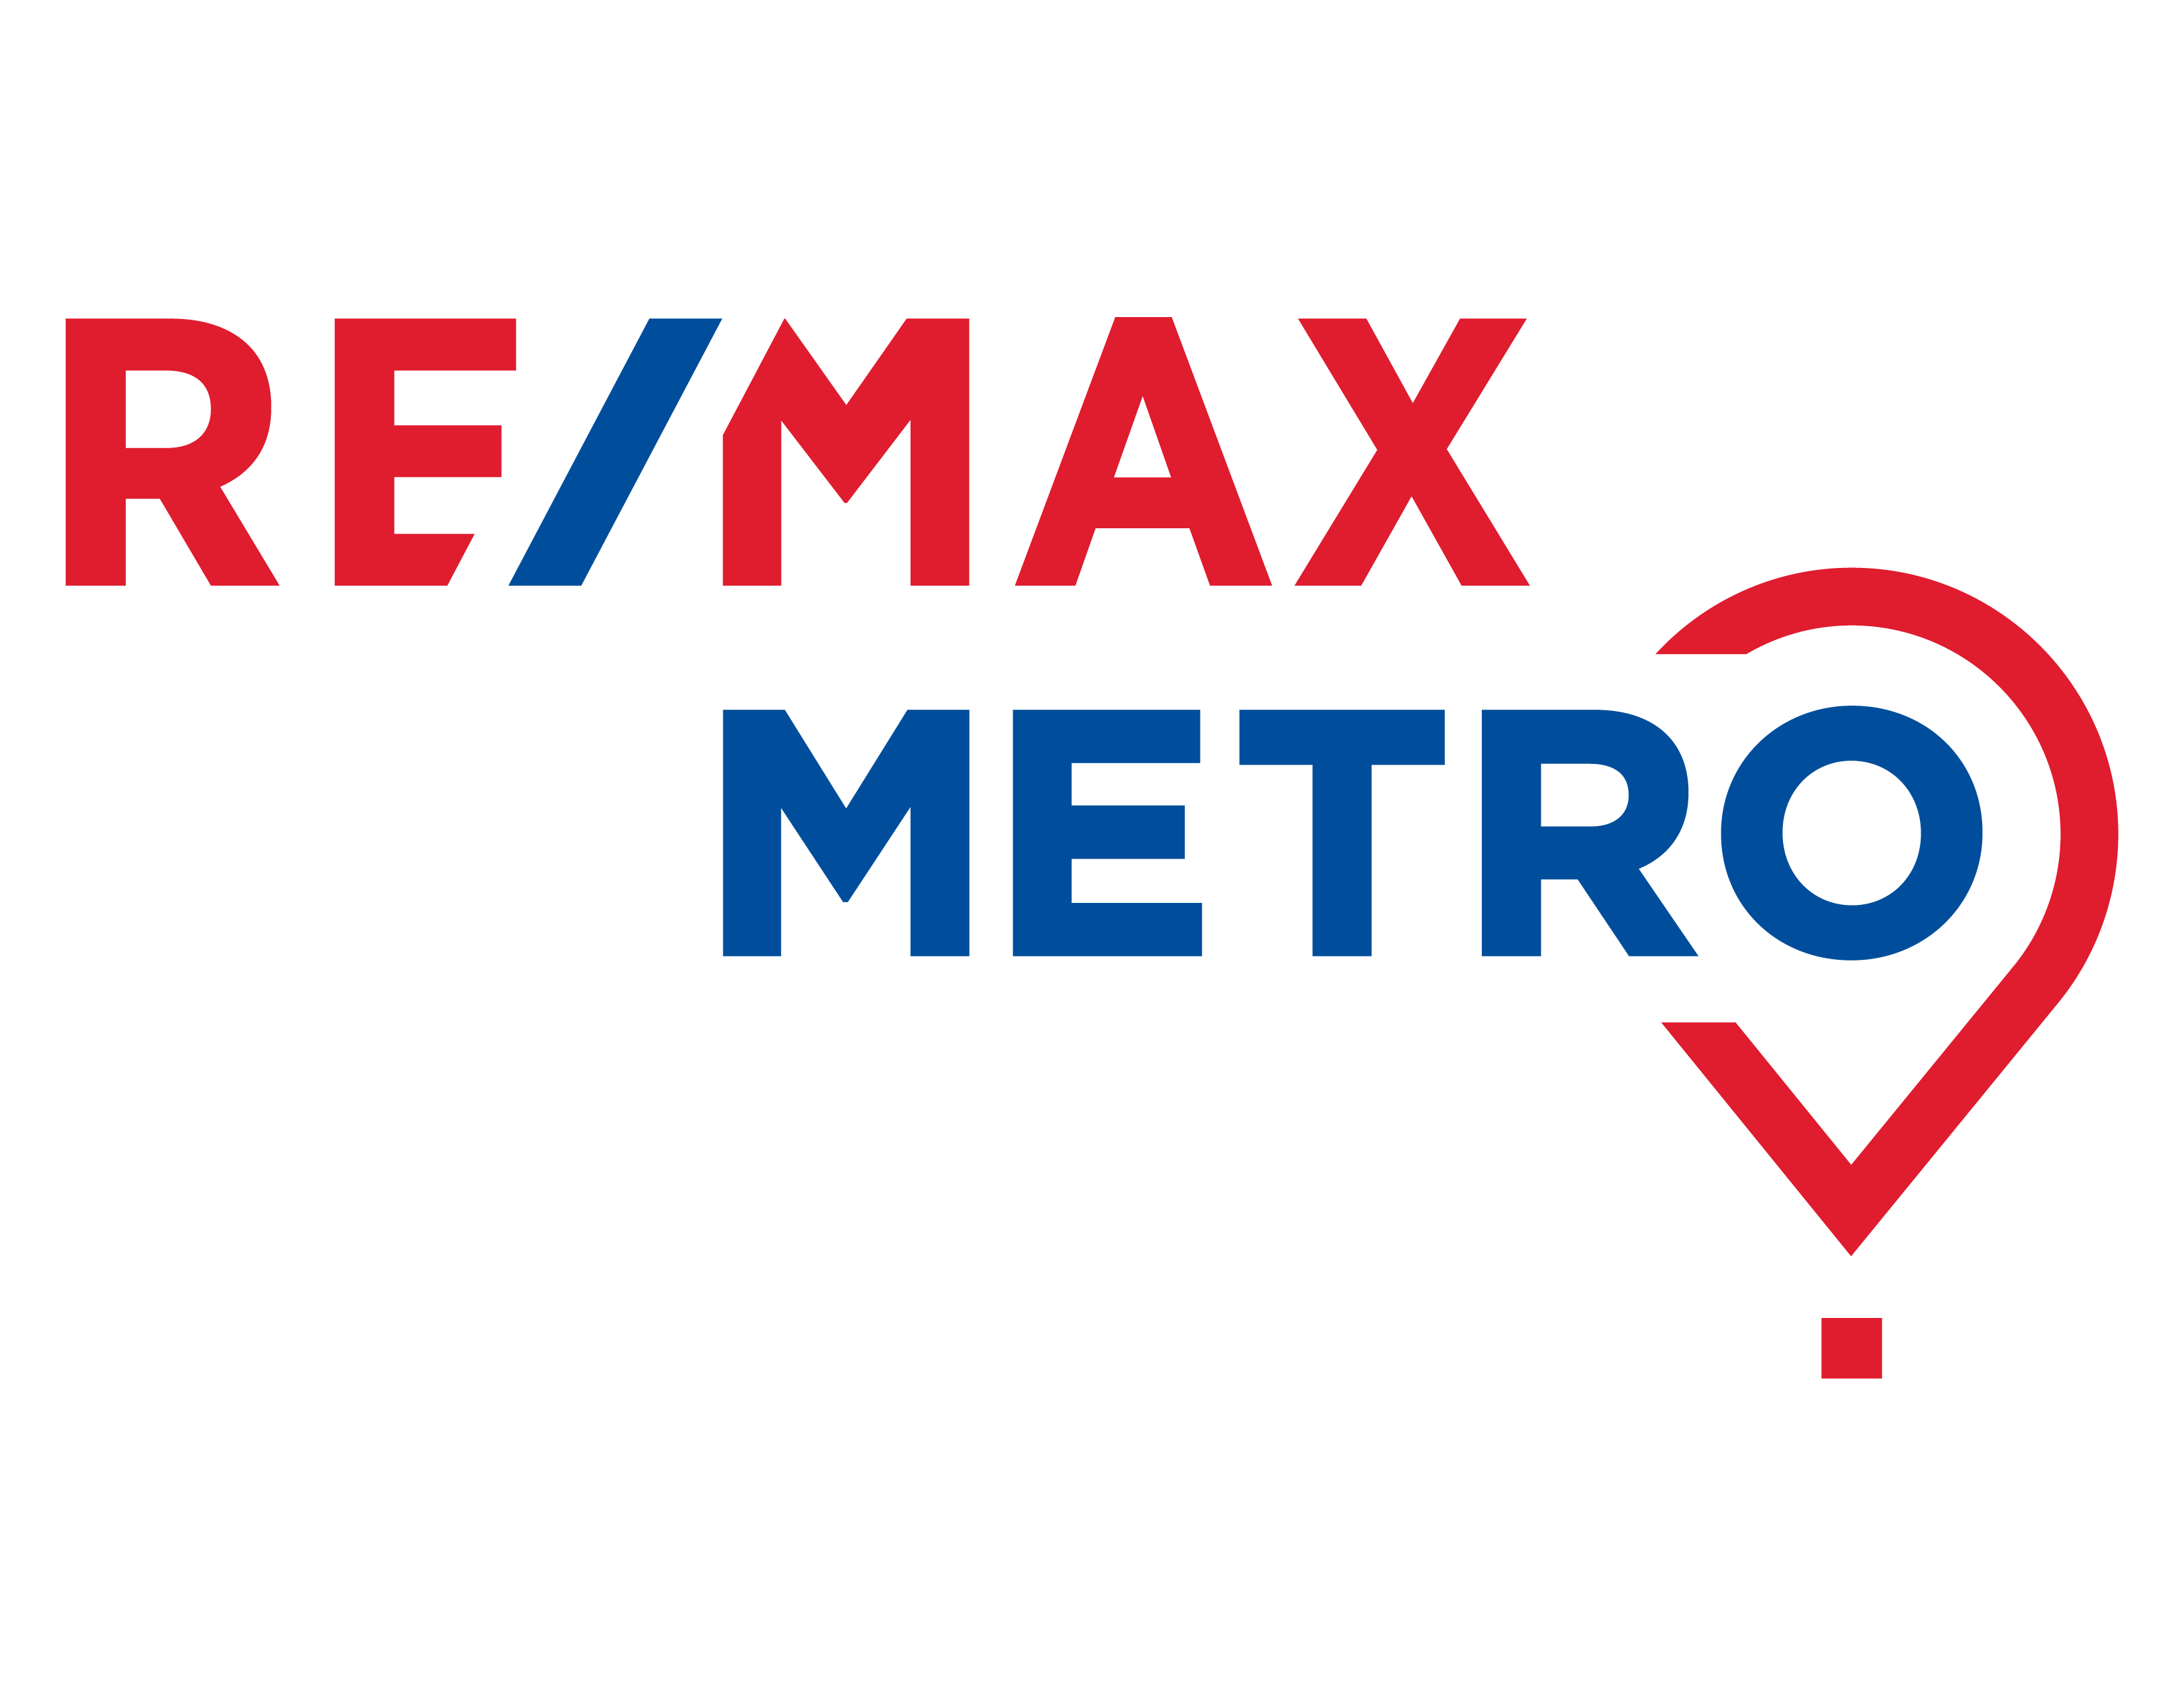 RE/MAX Metro